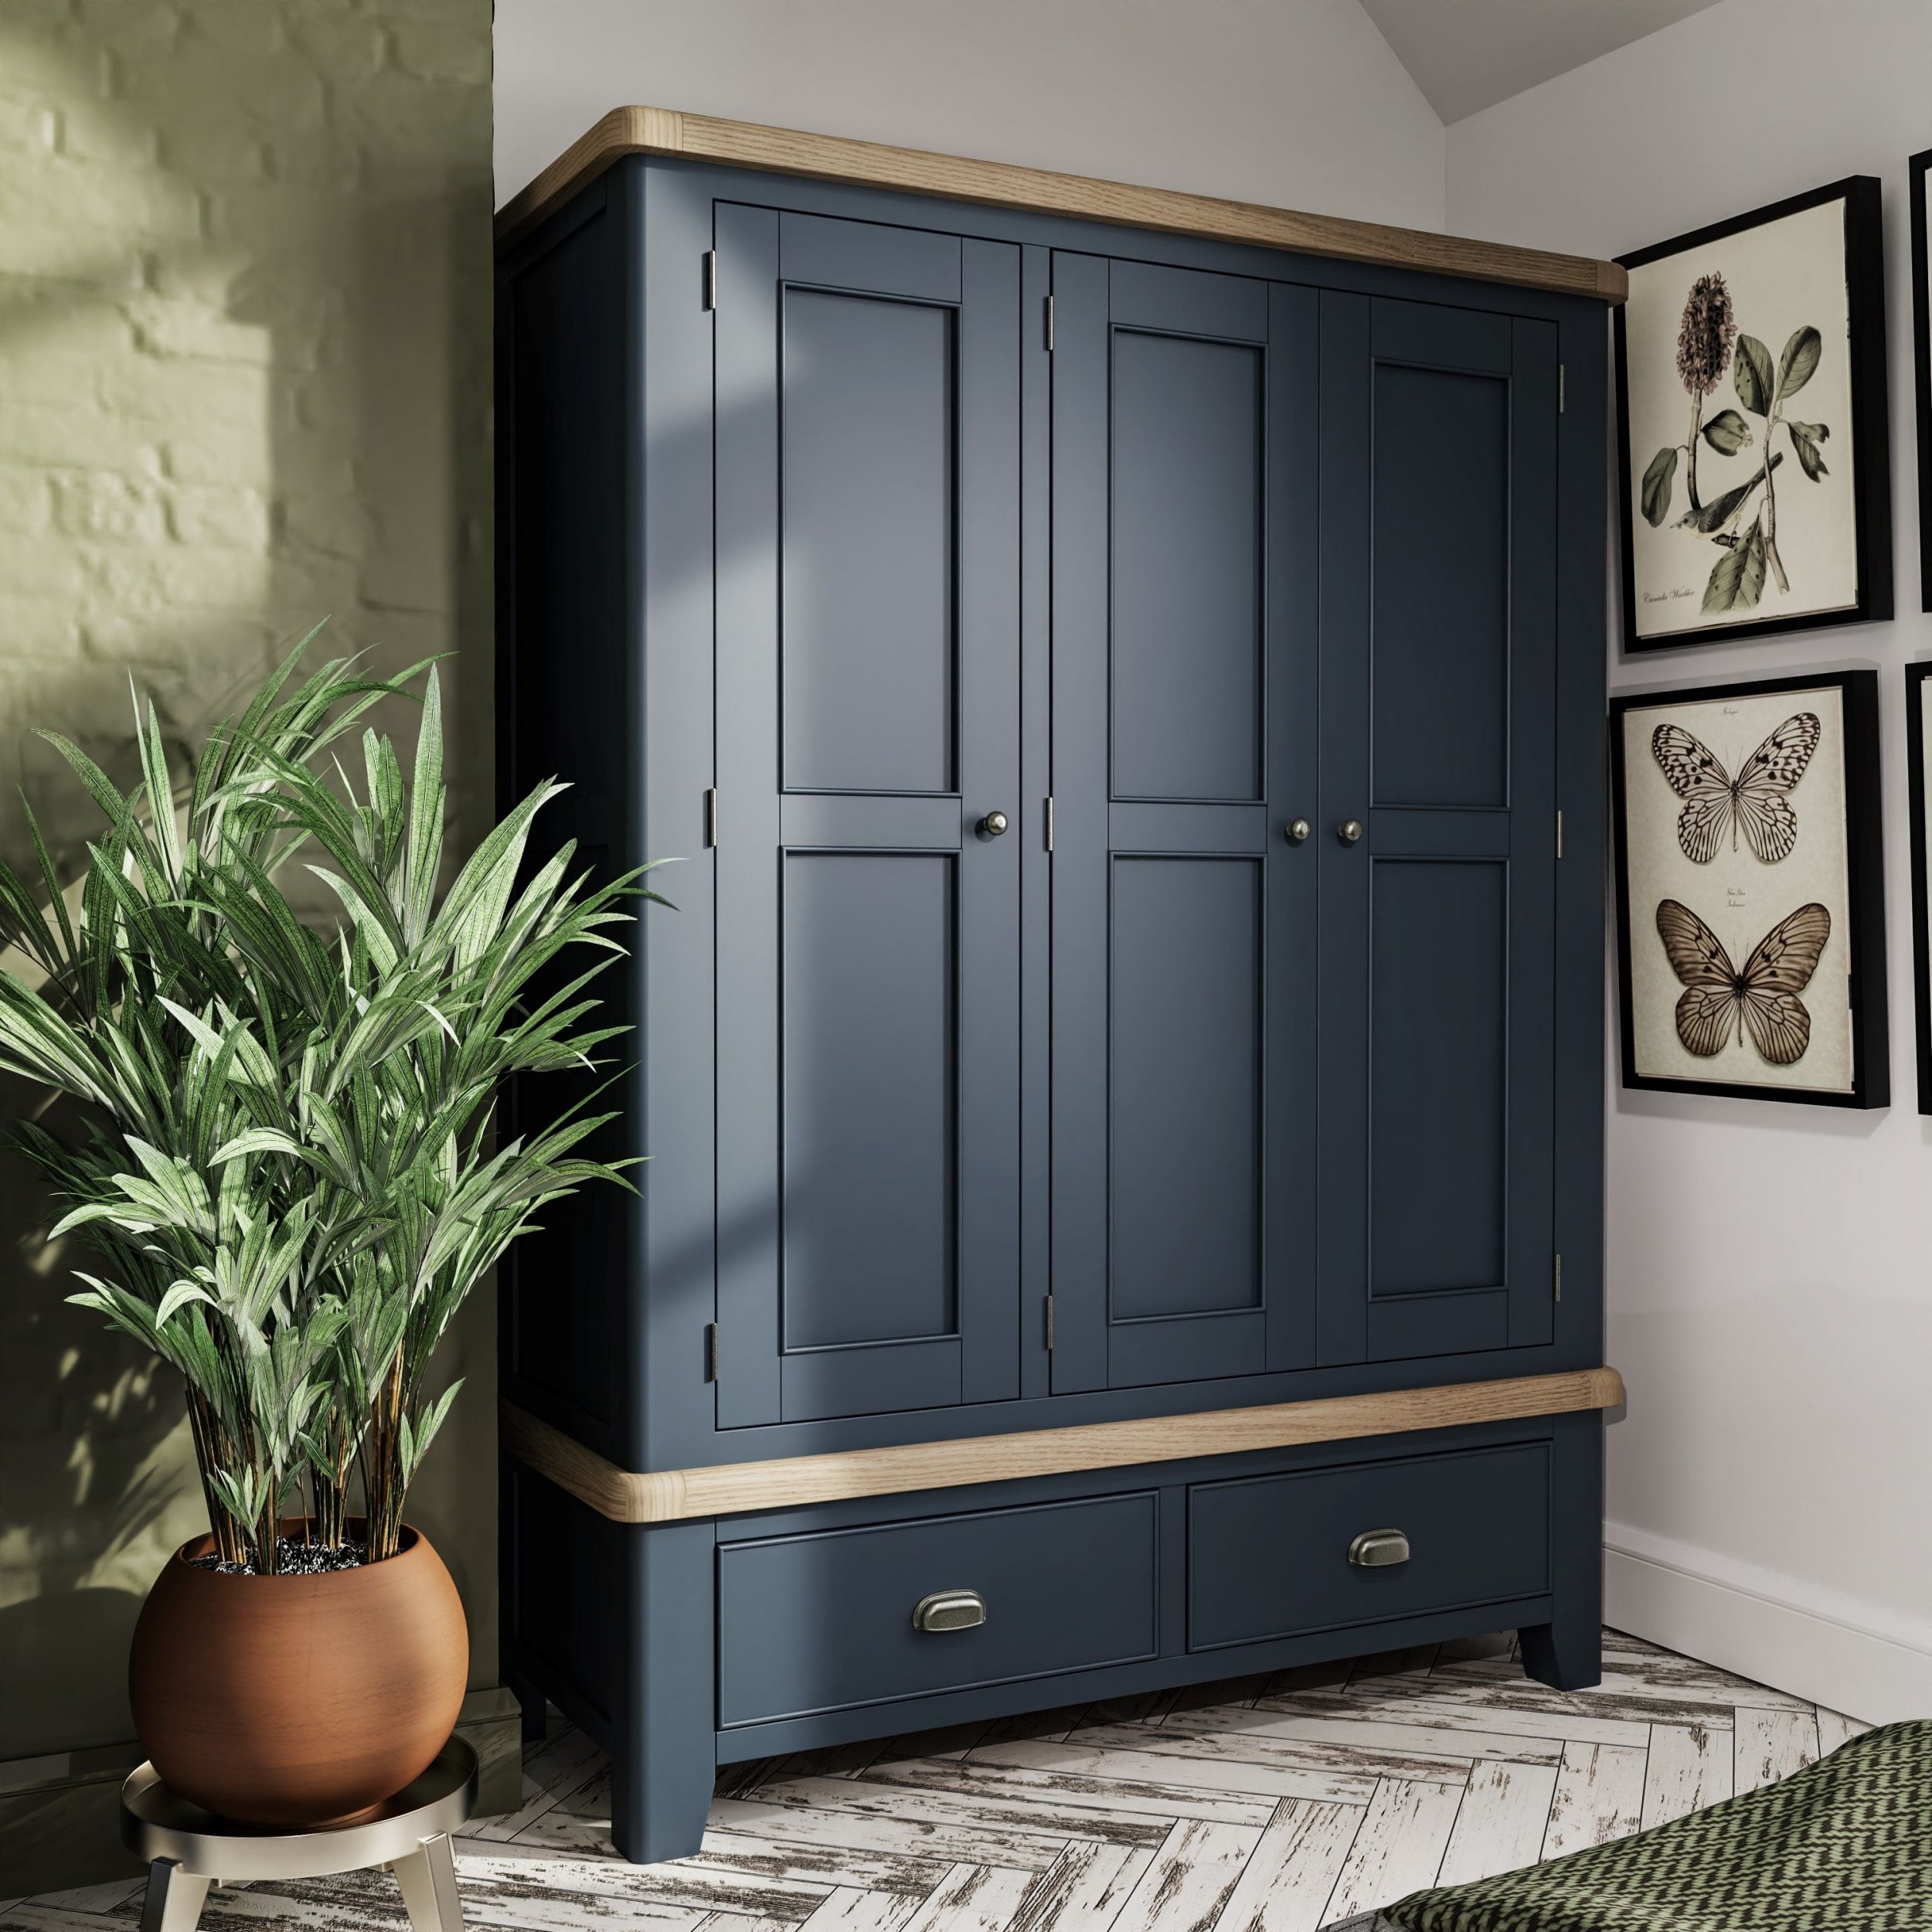 Haxby Oak Painted Bedroom 3 Door Wardrobe – Blue | The Clearance Zone Within 3 Door Wardrobes (View 3 of 20)